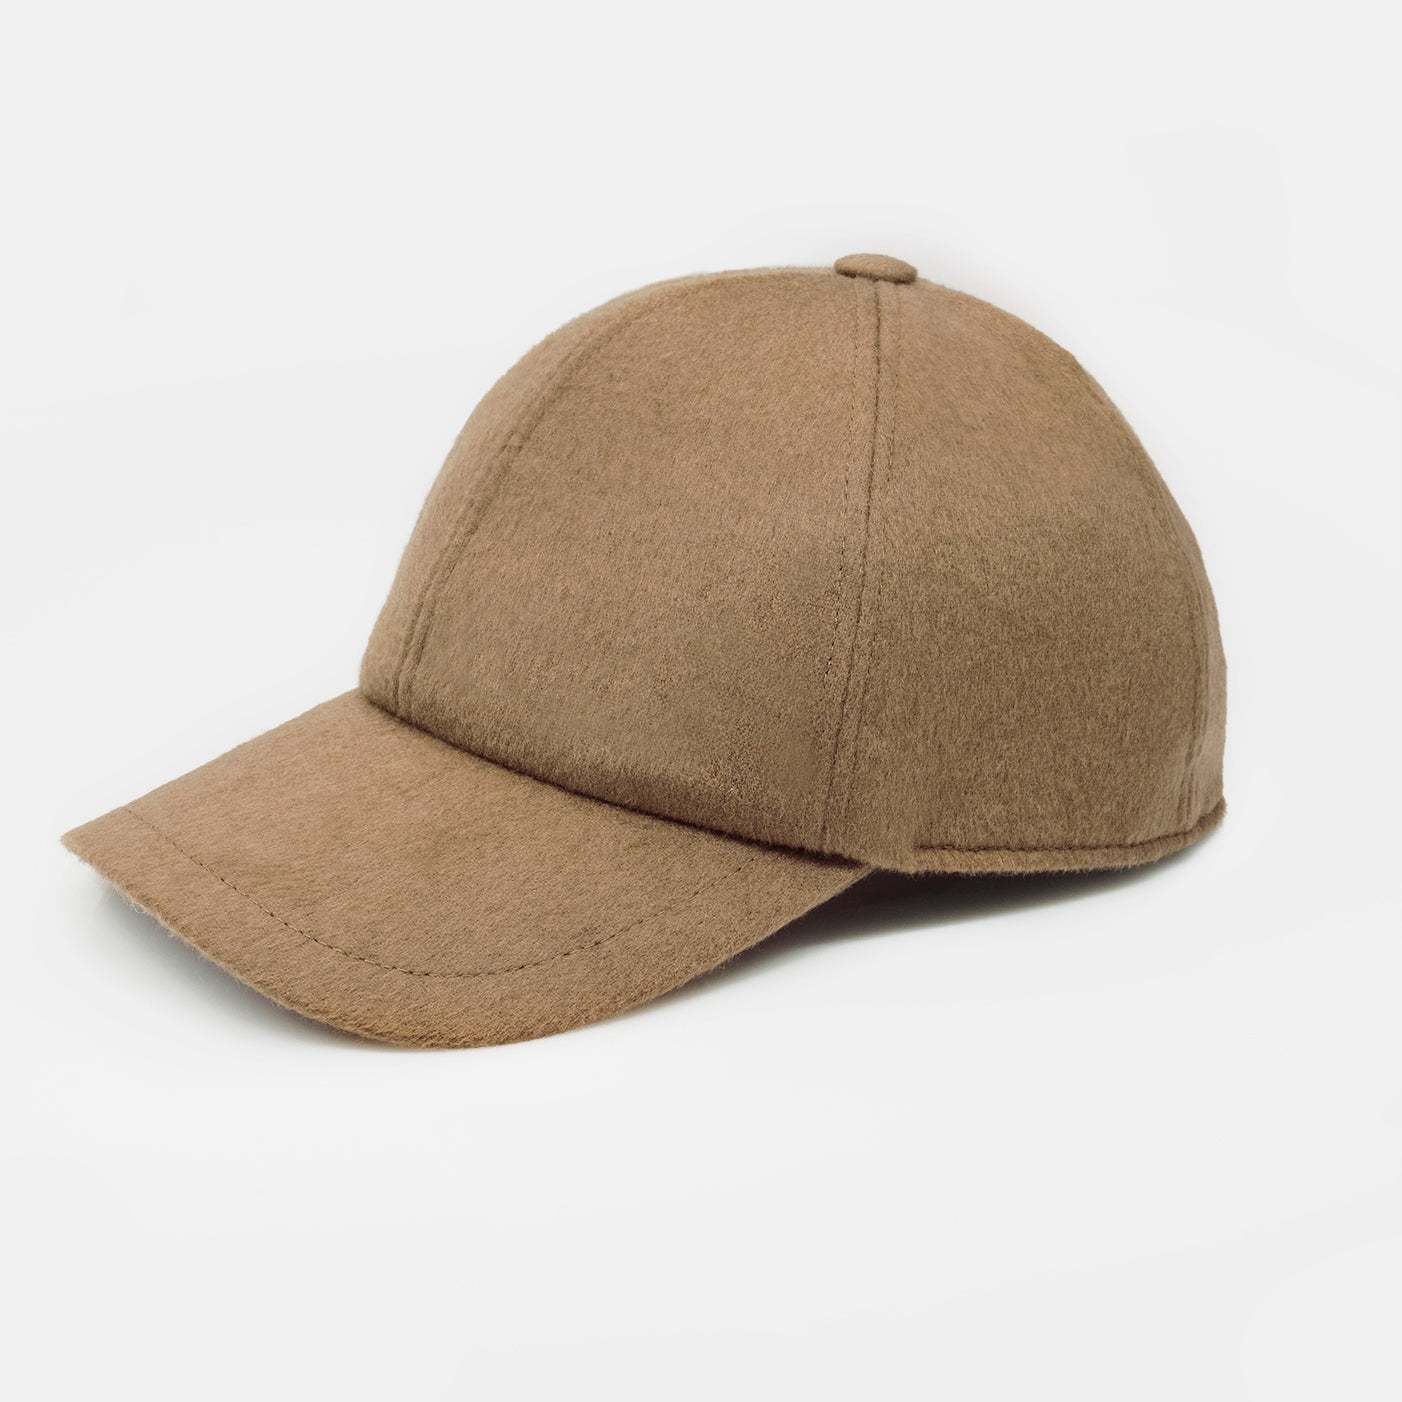 N33 BASEBALL CAP 100% cashmere cap made in Italy luxury baseball cap light brown, camel, beige, unisex,  high quality handmade cap artisan-made hat 